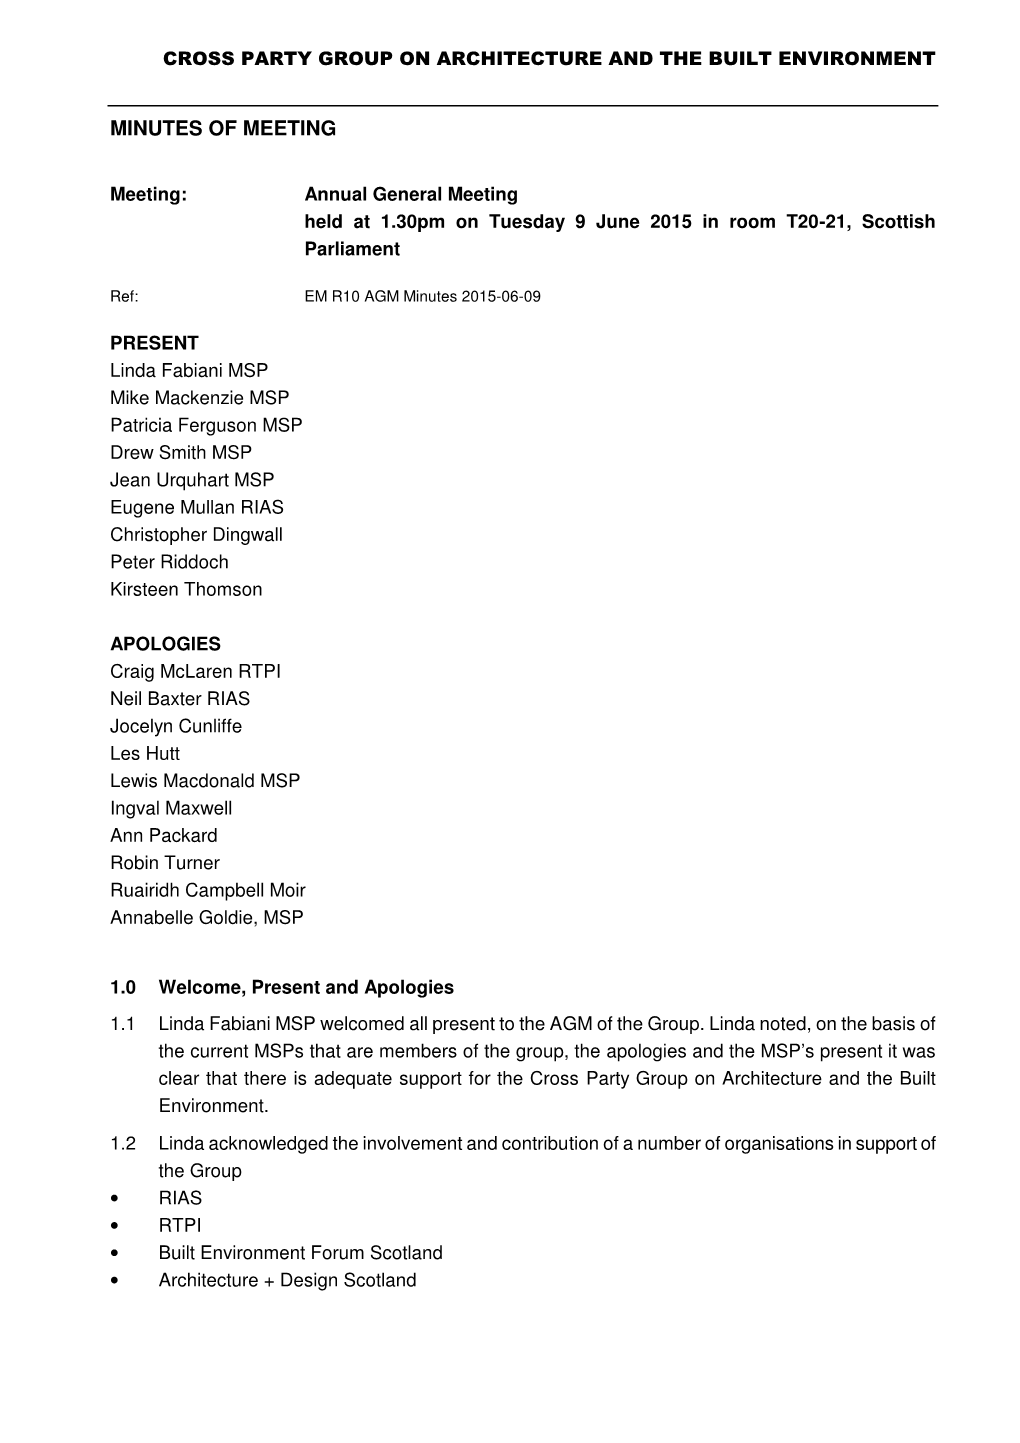 Minutes of Meeting 9 June 2015